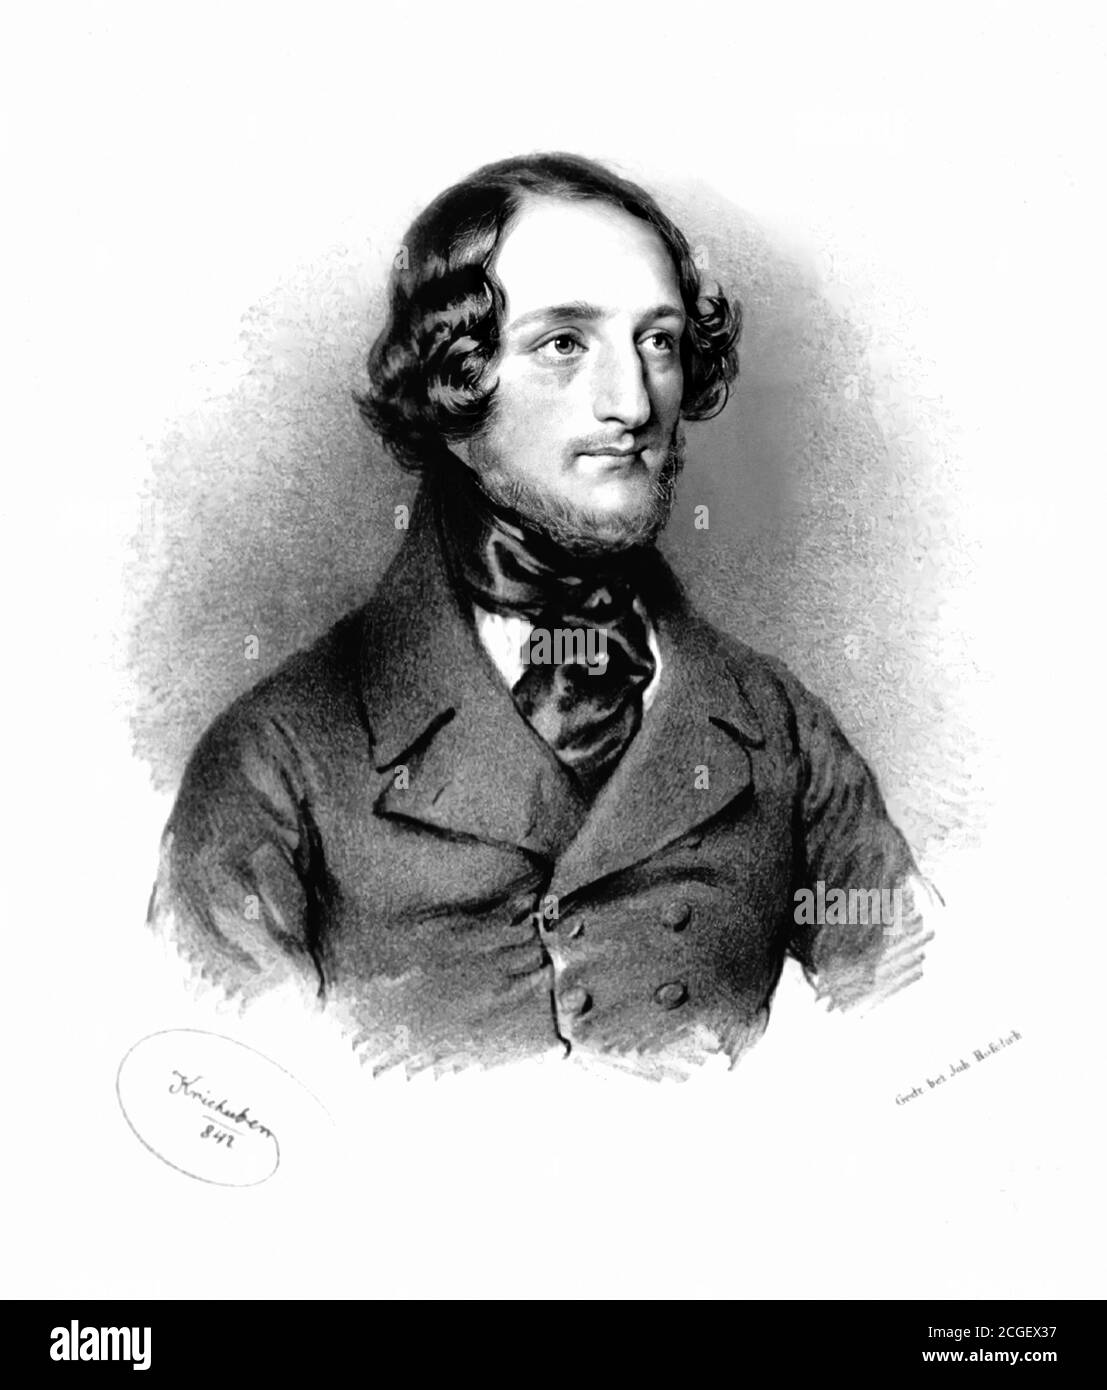 1842 , AUSTRIA : The austrian pianist and music composer SIGISMUND THALBERG ( Sigismund Fortuné François Thalberg , 1812 - 1871 ). Engraved portrait by Josef Kriehuber ( 1800  - 1876 ). -  PIANISTA - PIANO - PIANOFORTE - COMPOSITORE - OPERA - MUSICA CLASSICA - classical - portrait - ritratto  - OPERATIC - OPERA LIRICA  - classica - classical - collar - colletto  --- Archivio GBB Stock Photo